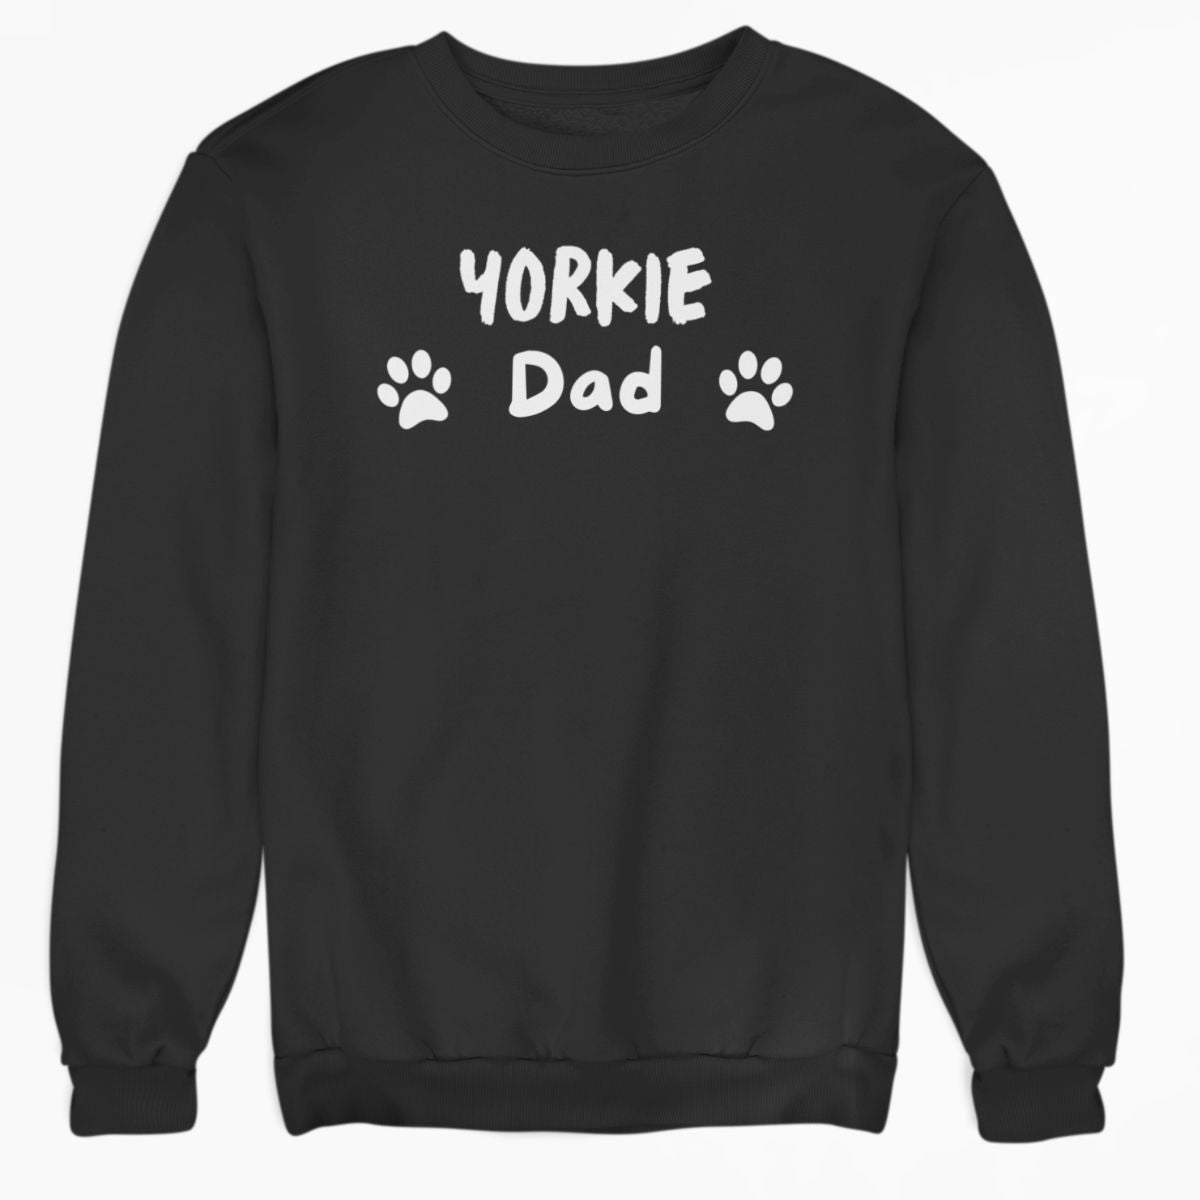 Yorkie Dad Shirt